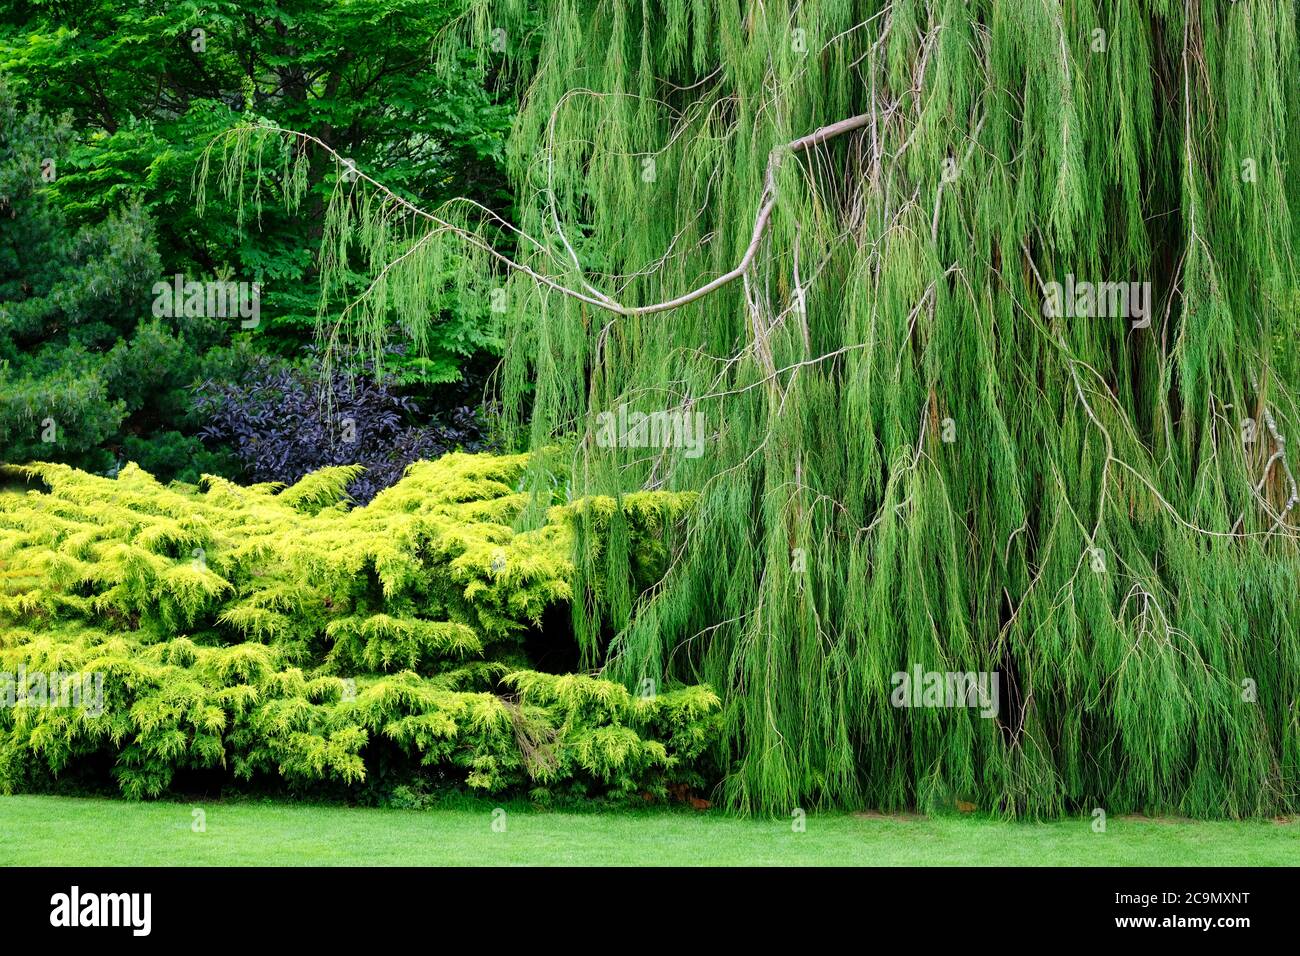 Full frame image of lush evergreen foliage - John Gollop Stock Photo